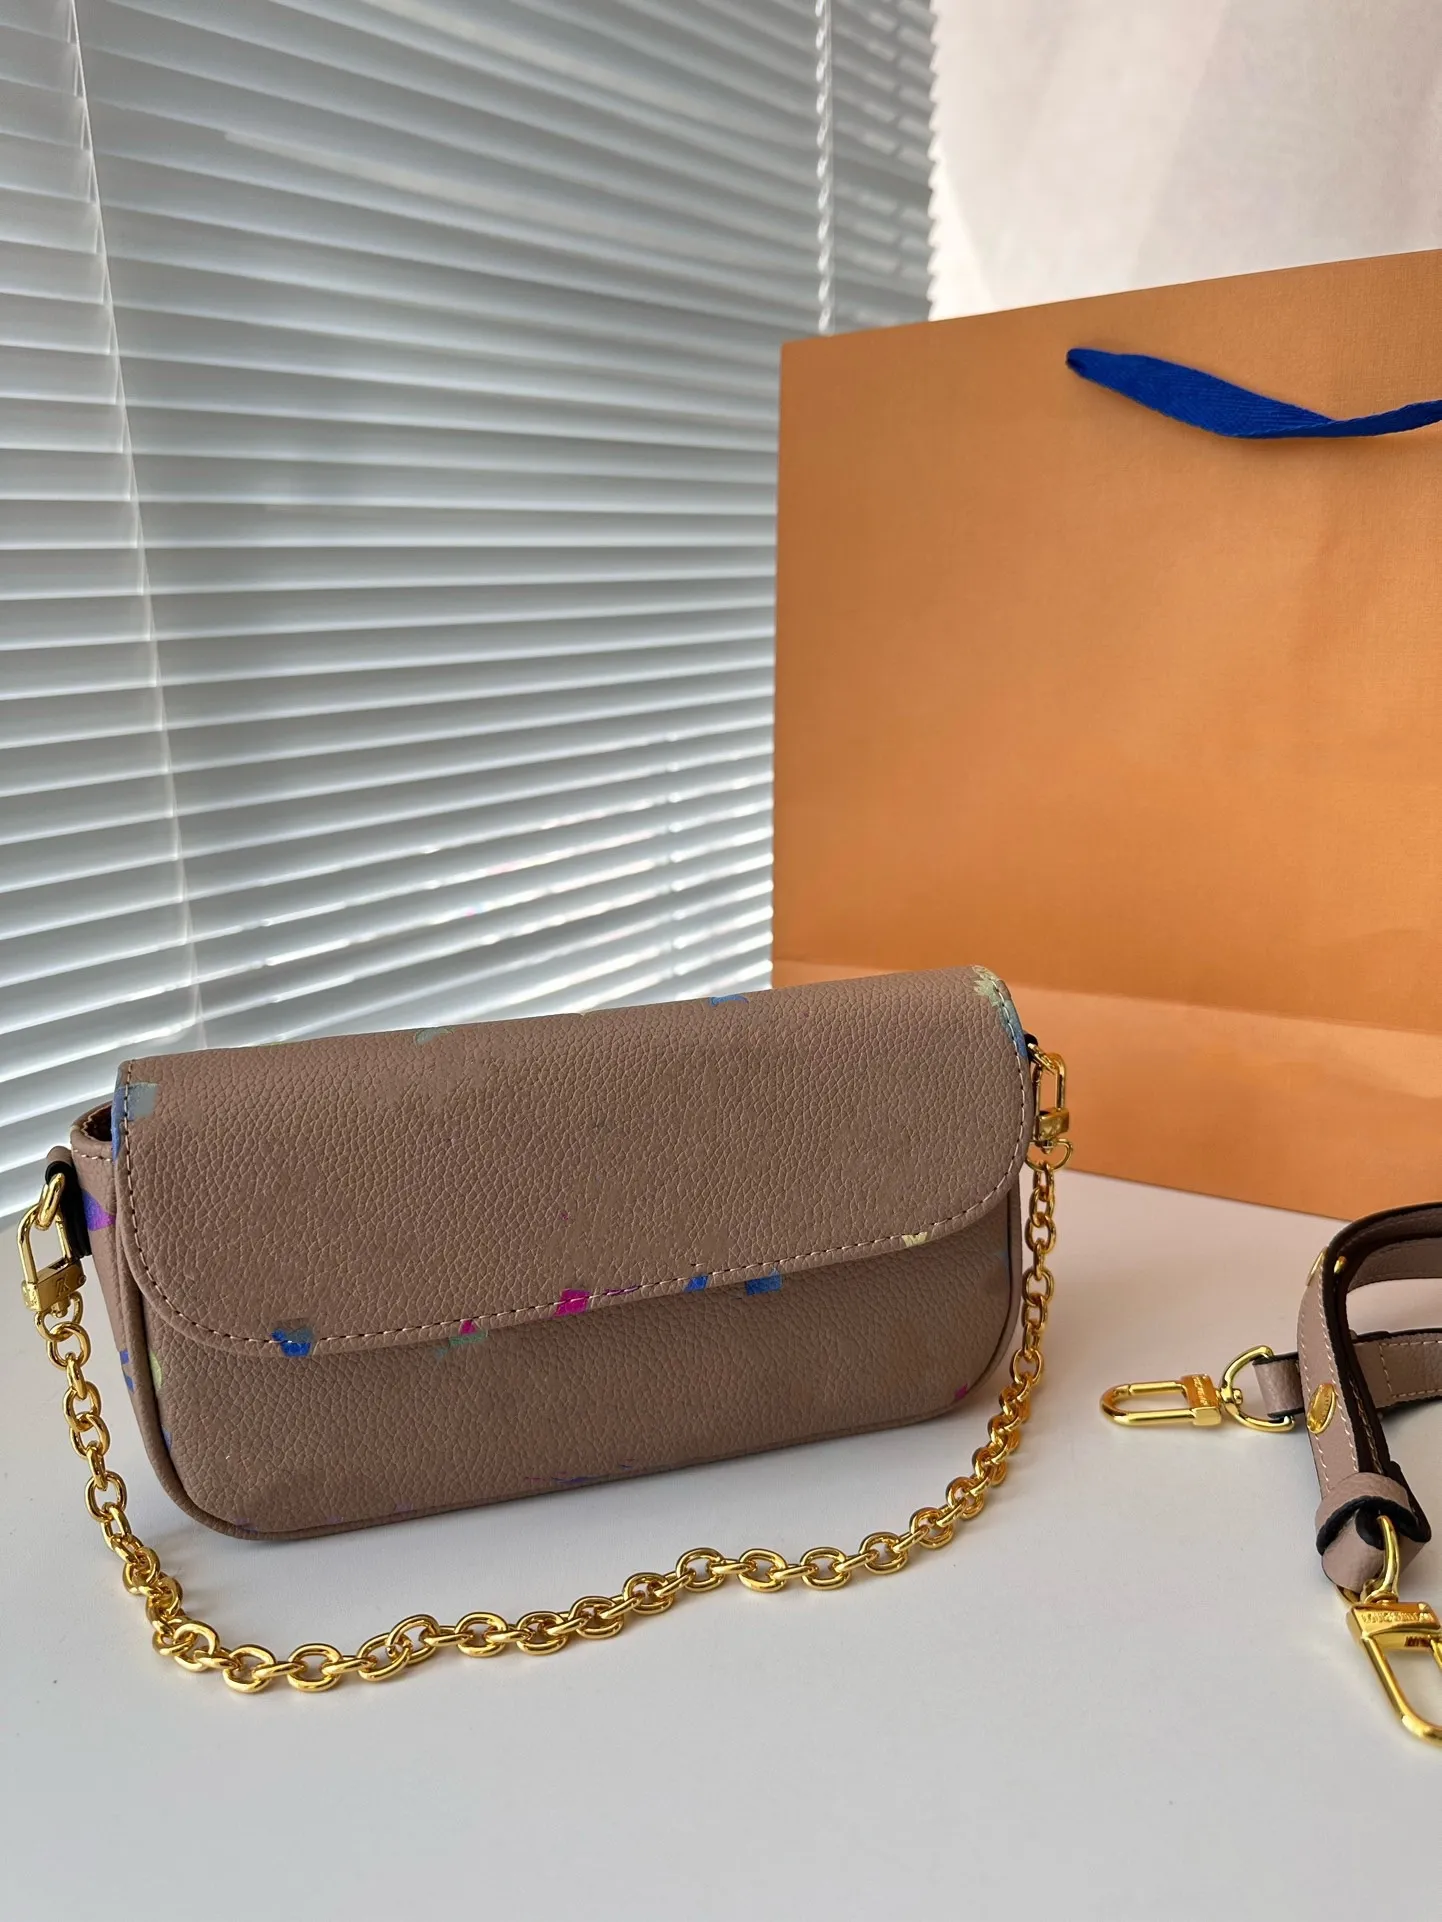 Fashion Luxury Diane Bag Louiseitys Vuttonse Famous Designer Bag Bag Bag de Hands Saco de Bola de Handal